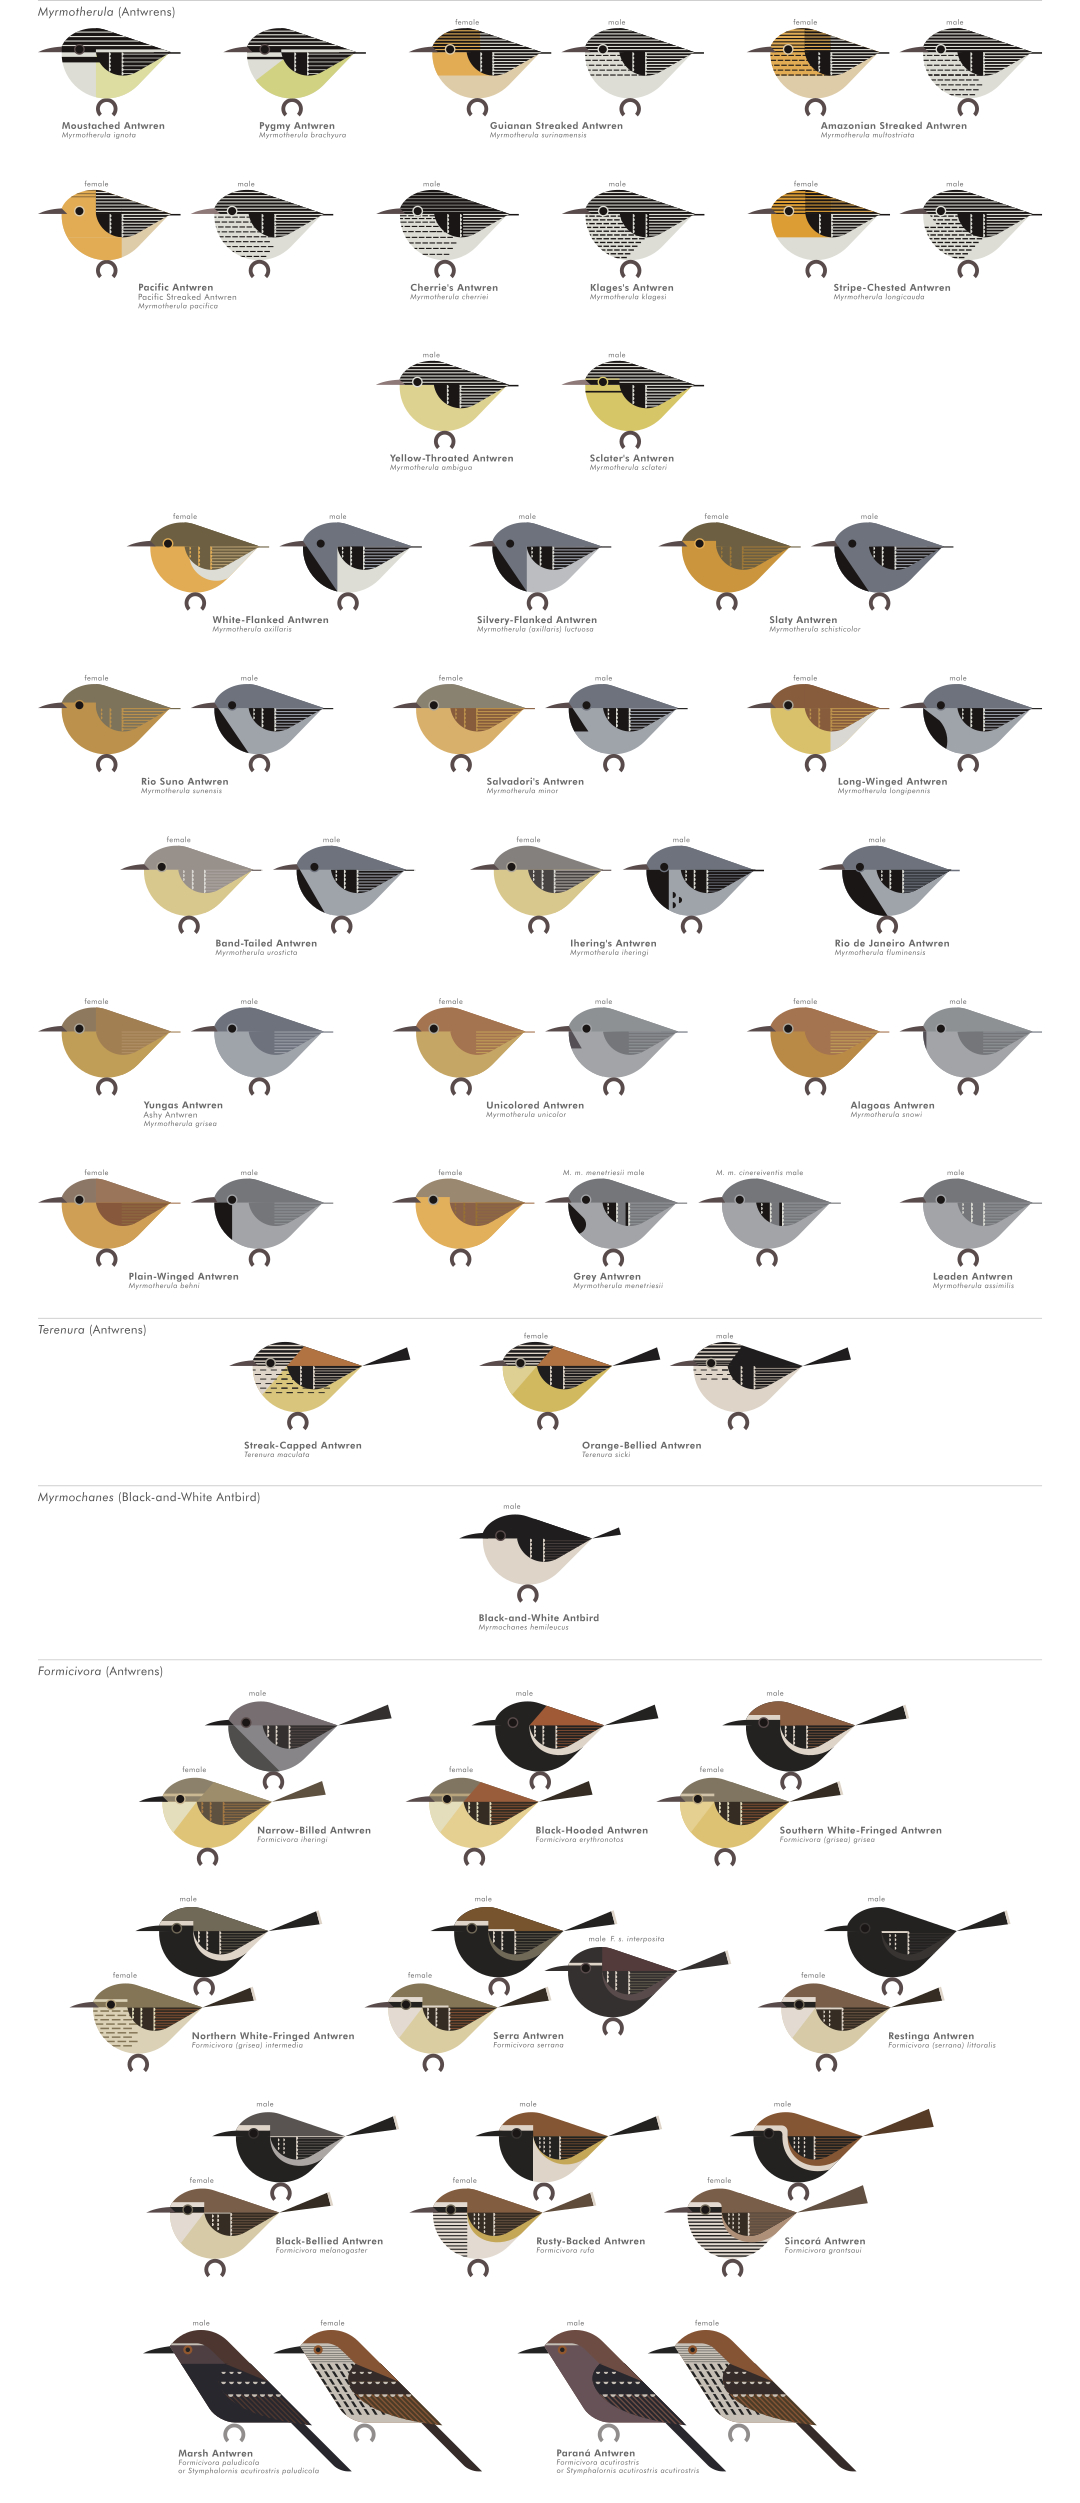 scott partridge - AVE - avian vector encyclopedia - antbirds - bird vector art